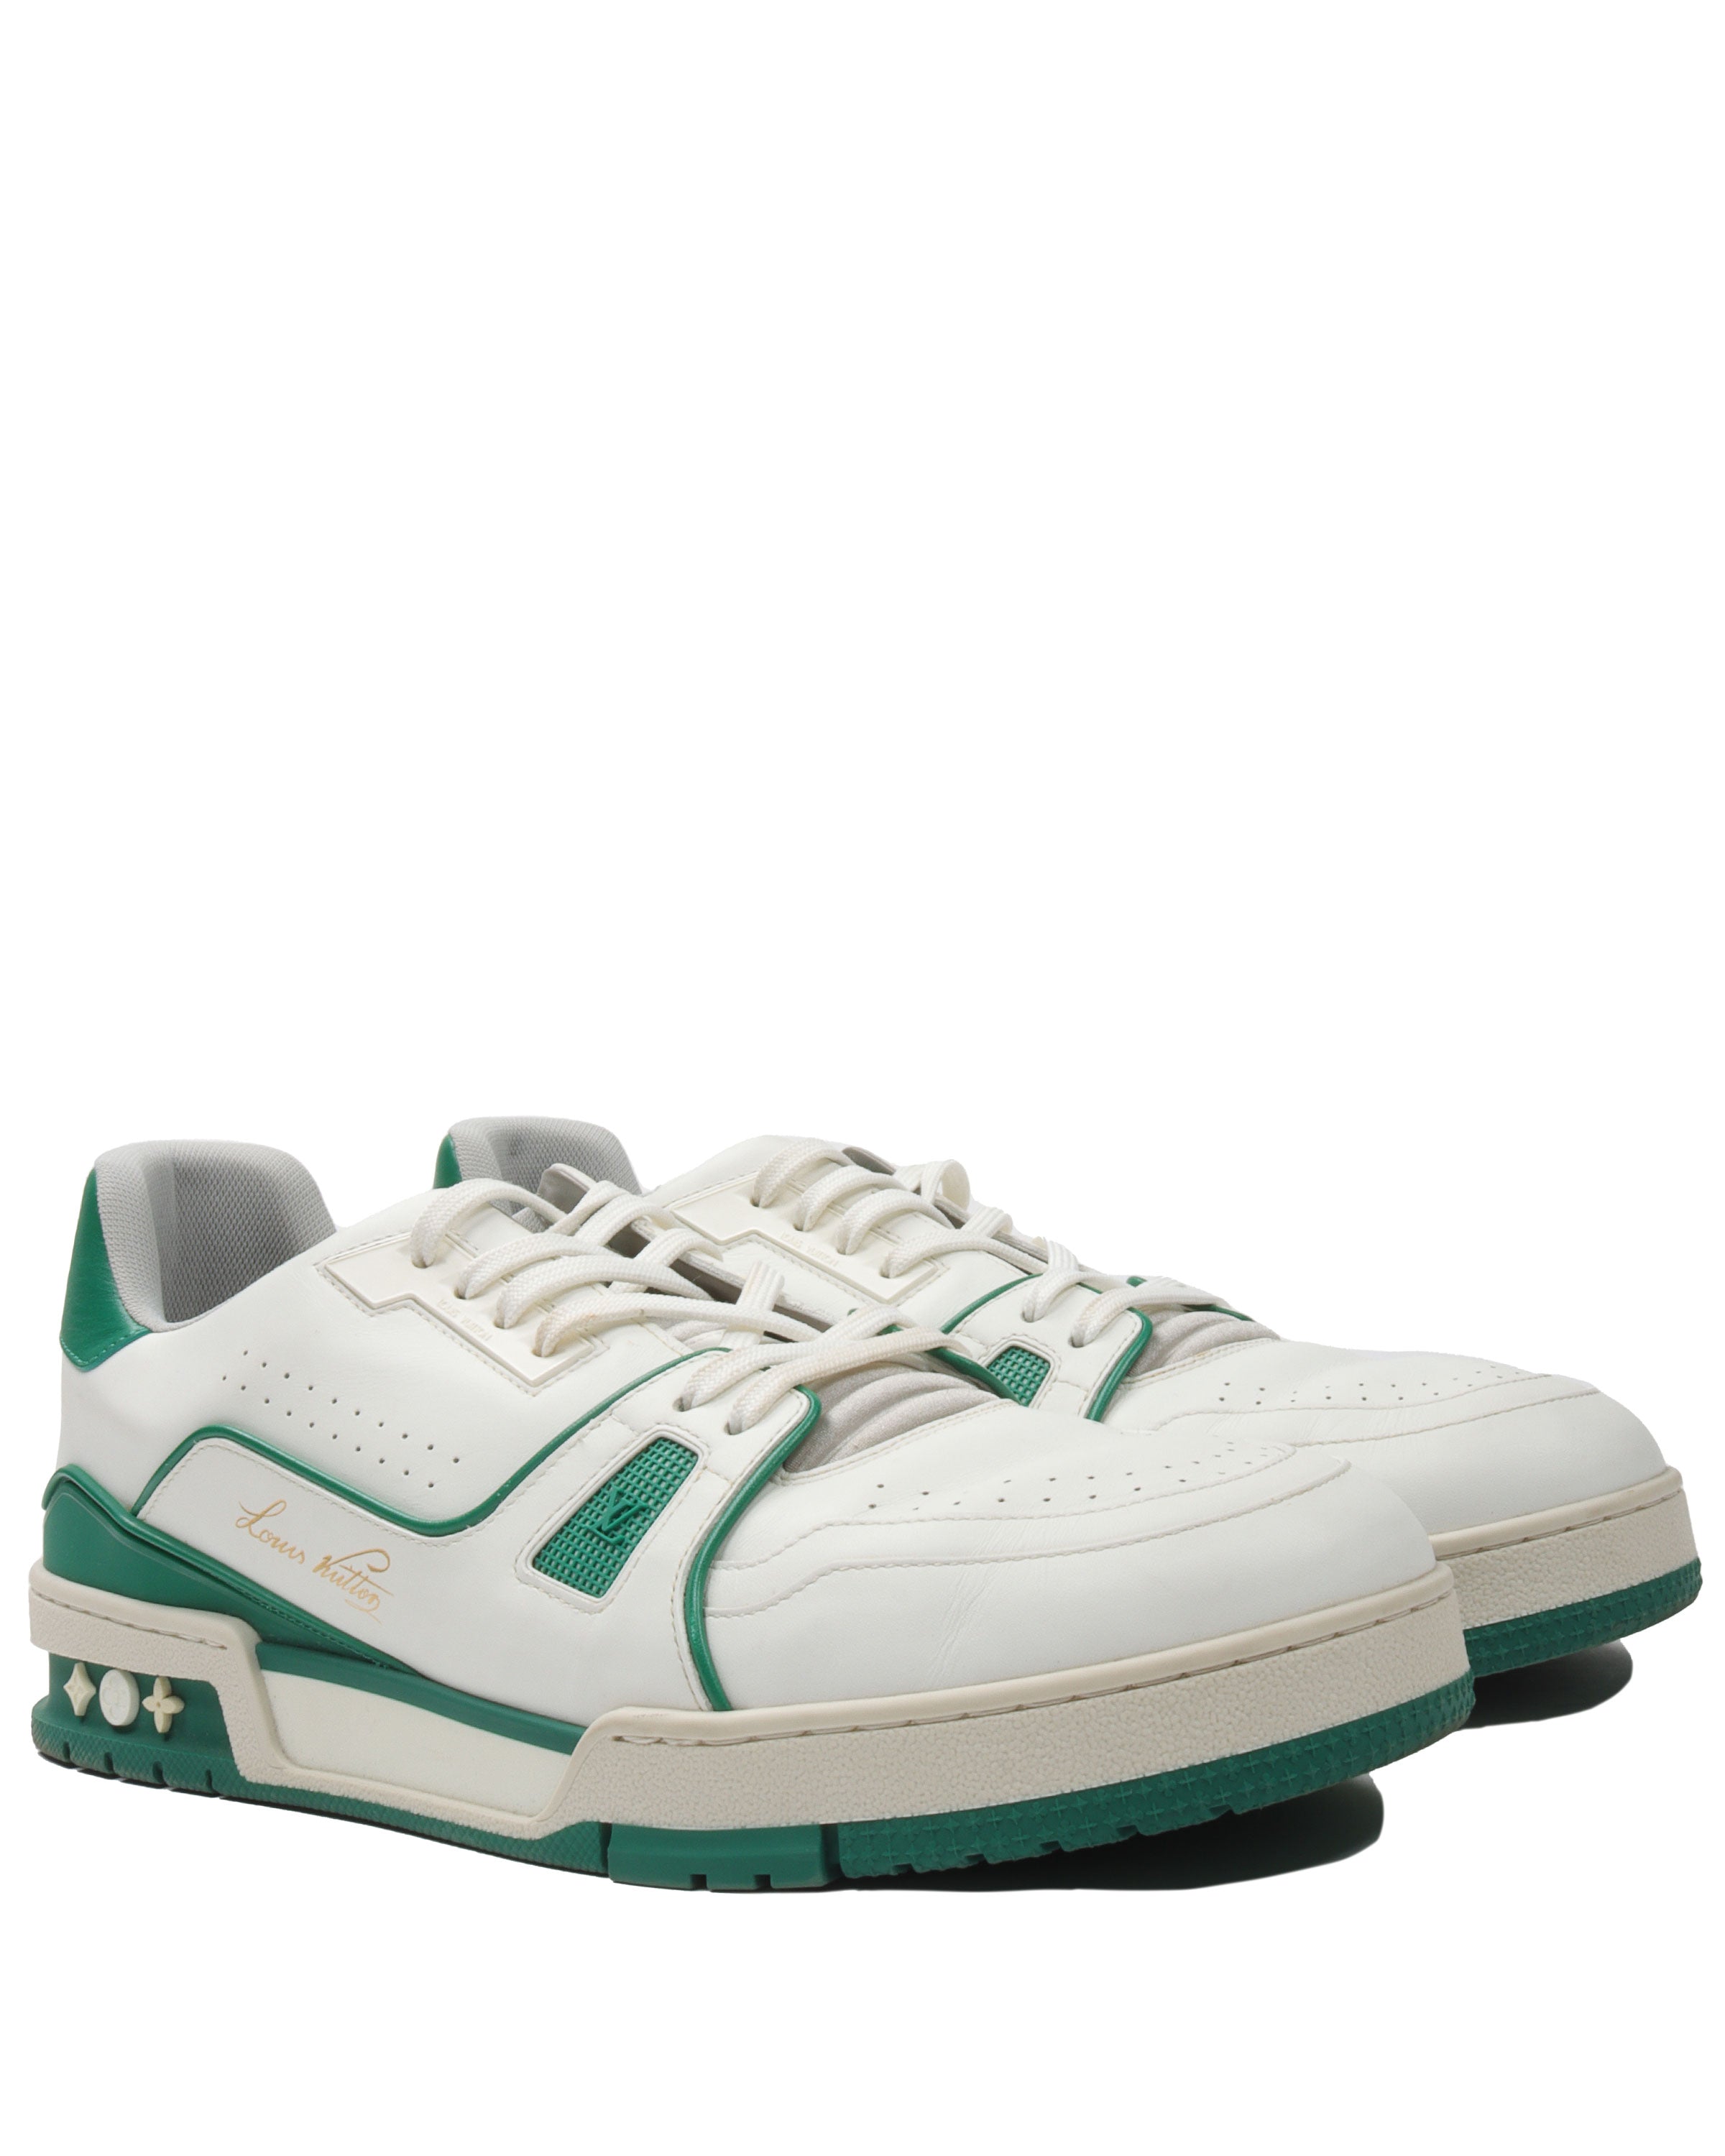 Louis Vuitton LV Trainer Sneaker Green. Size 10.0